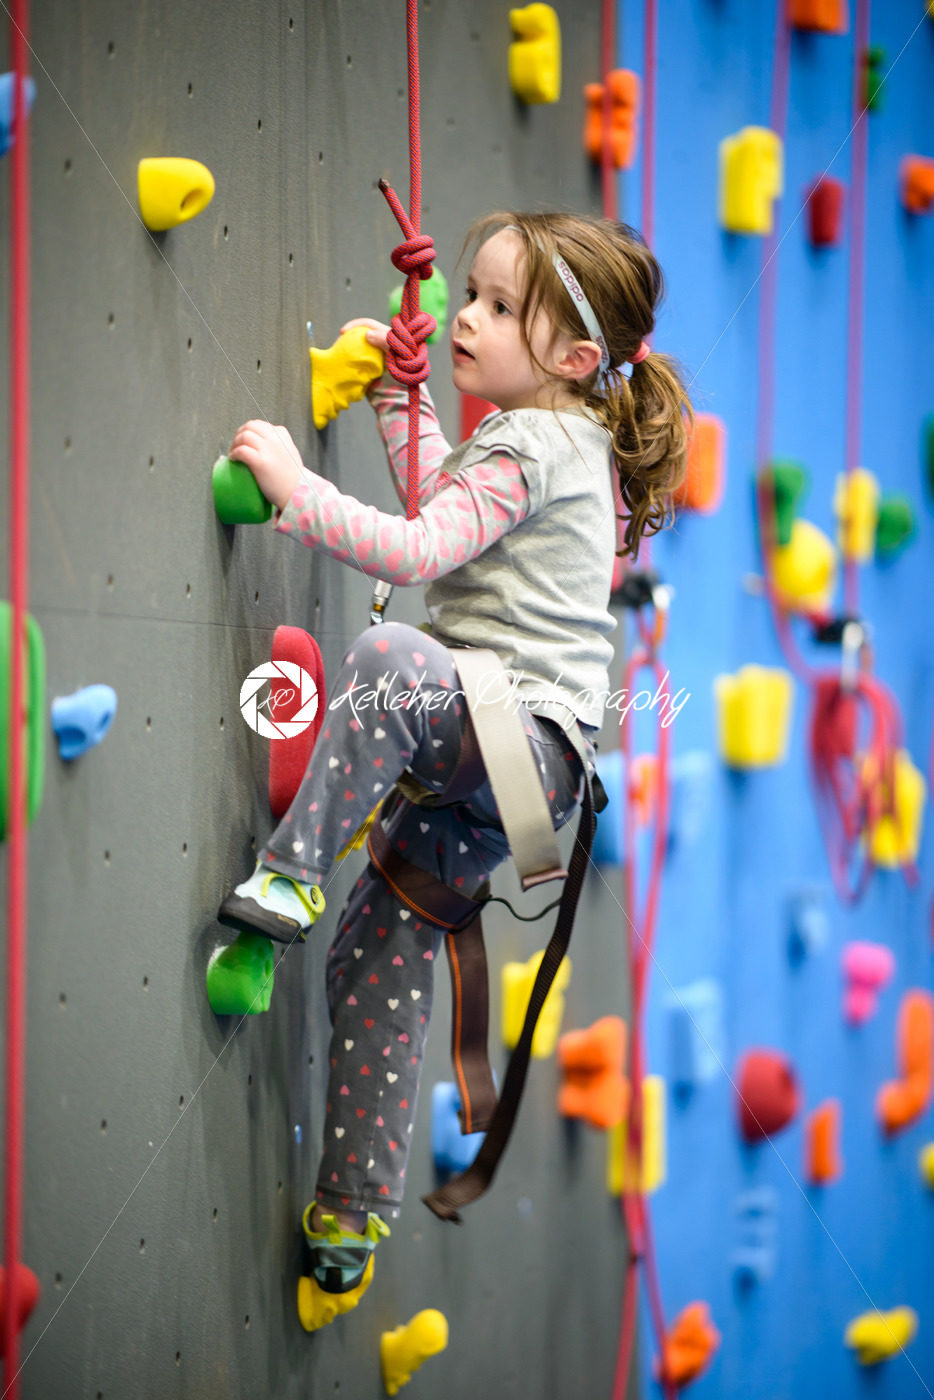 little girl climbing a rock wall indoor - Kelleher Photography Store